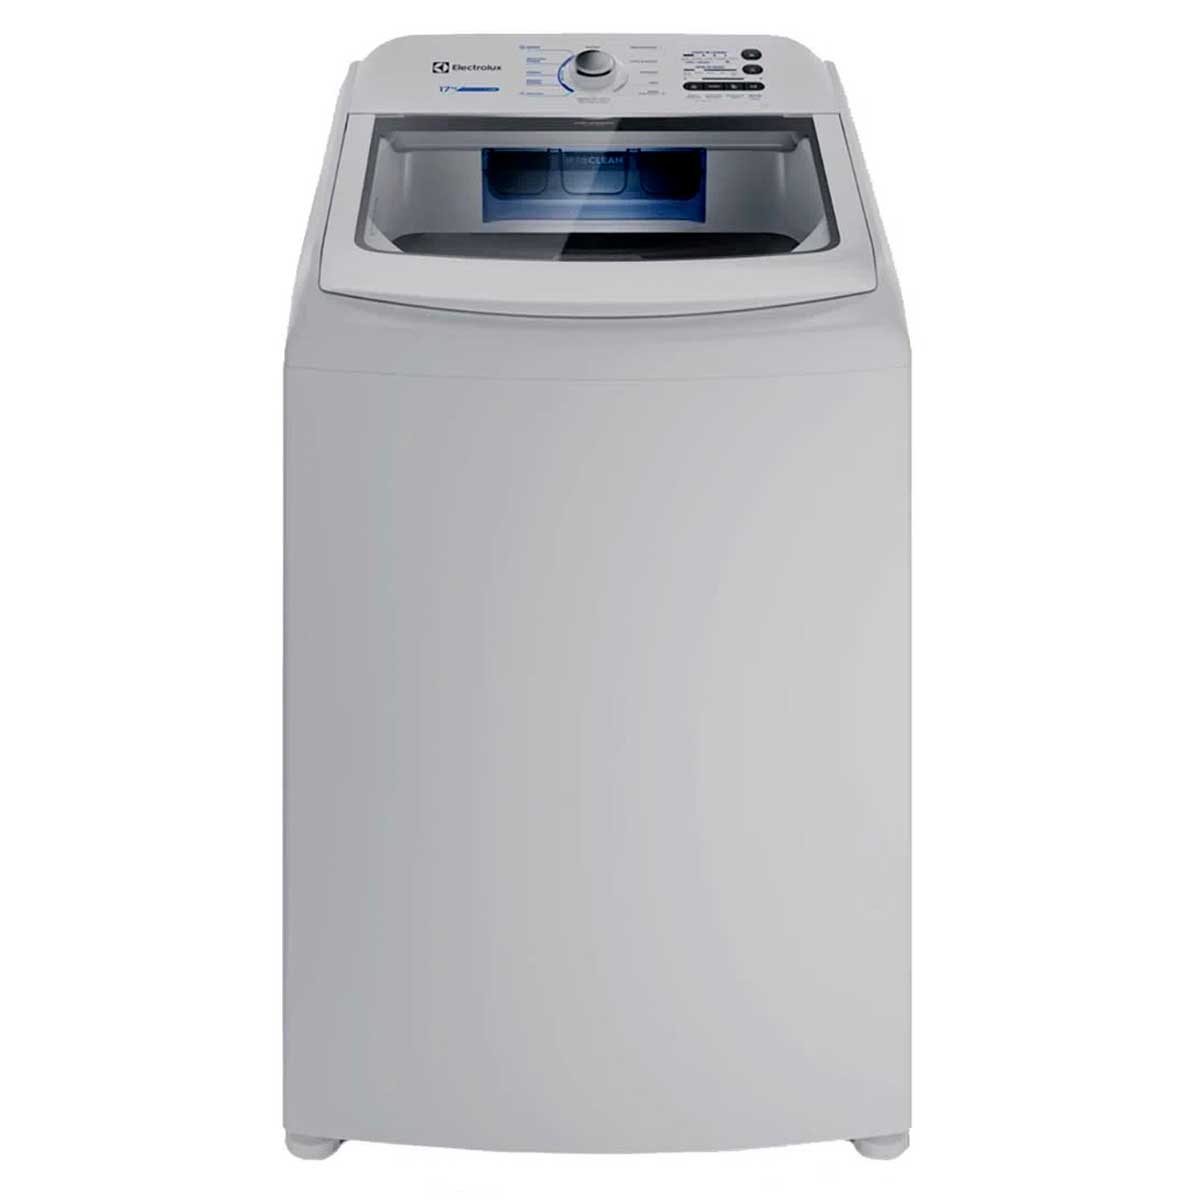 lavadora-electrolux-led17-17kg-220v-branca-com-cesto-inox-1.jpg